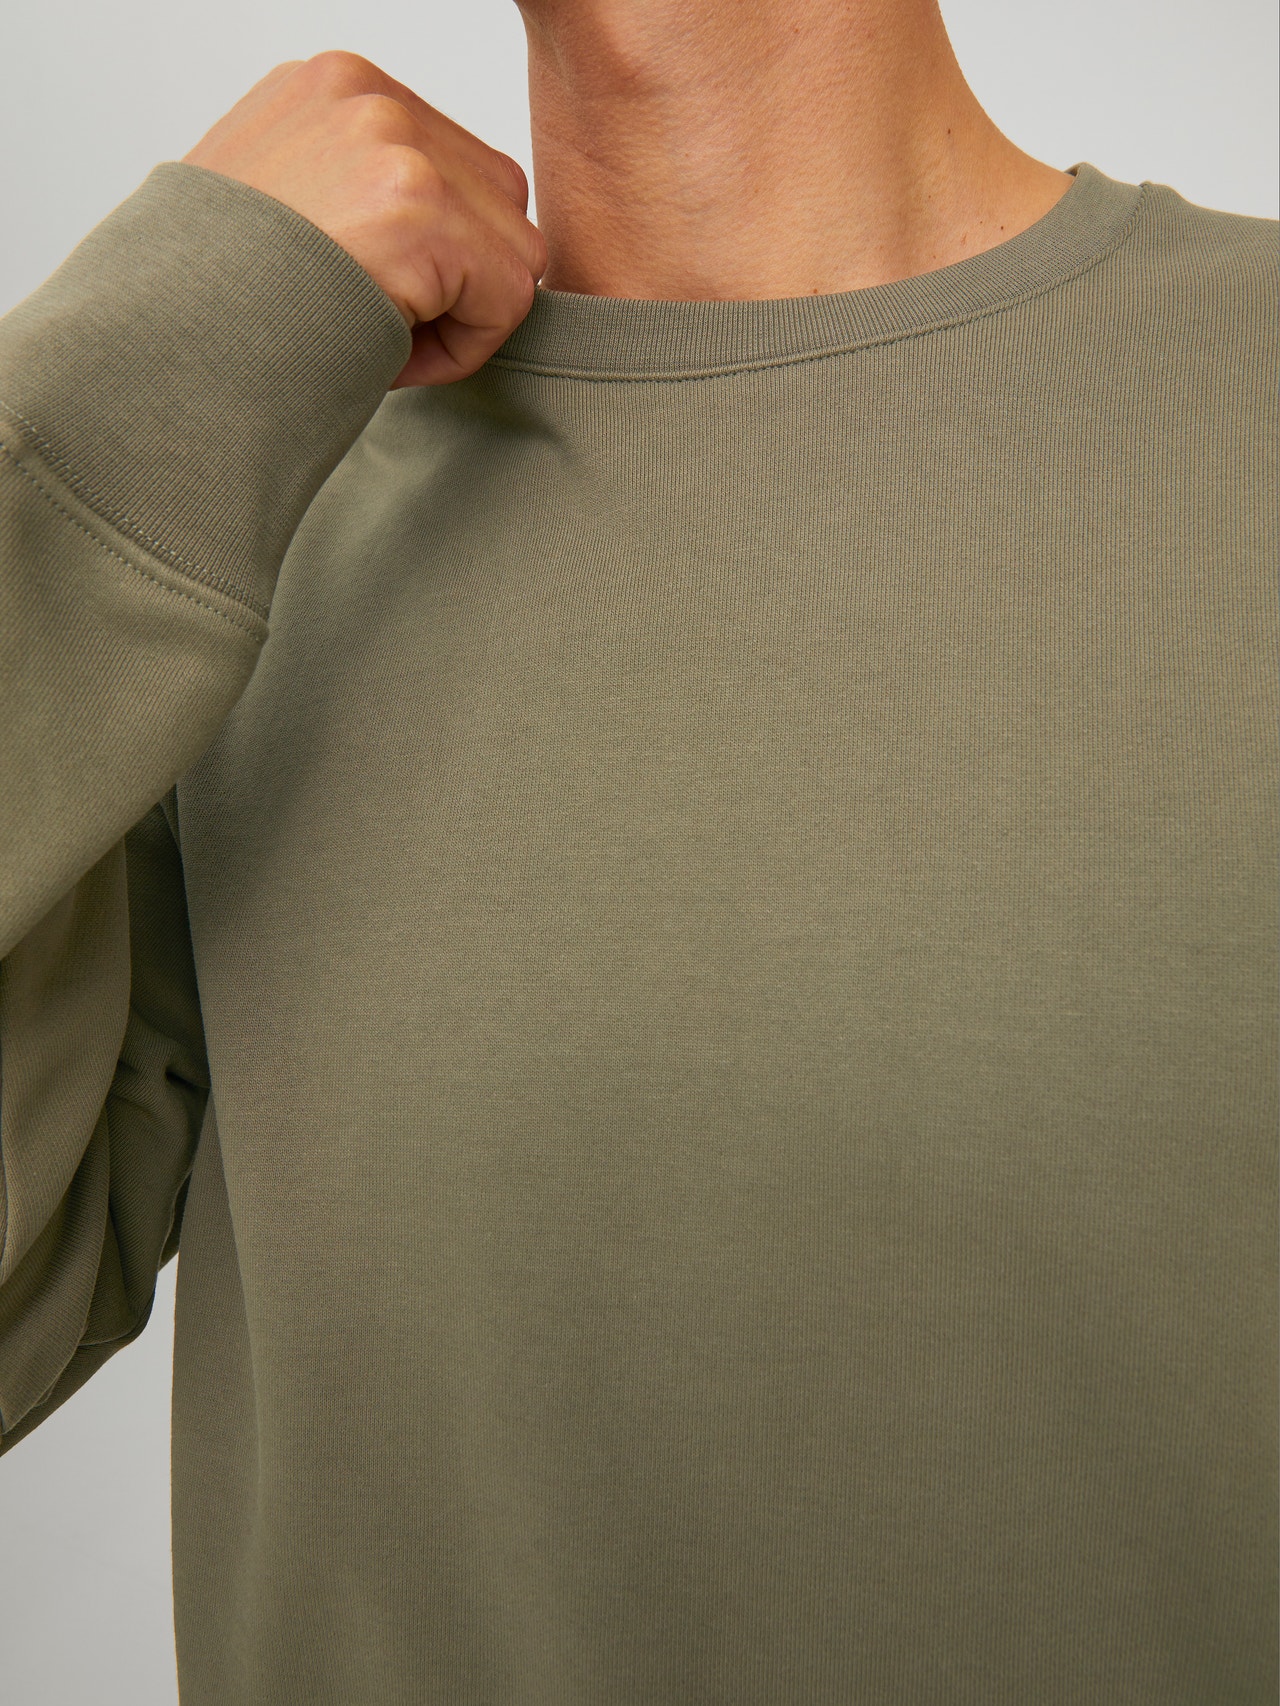 Jack & Jones RDD Ensfarvet Sweatshirt med rund hals -Dusty Olive - 12218242